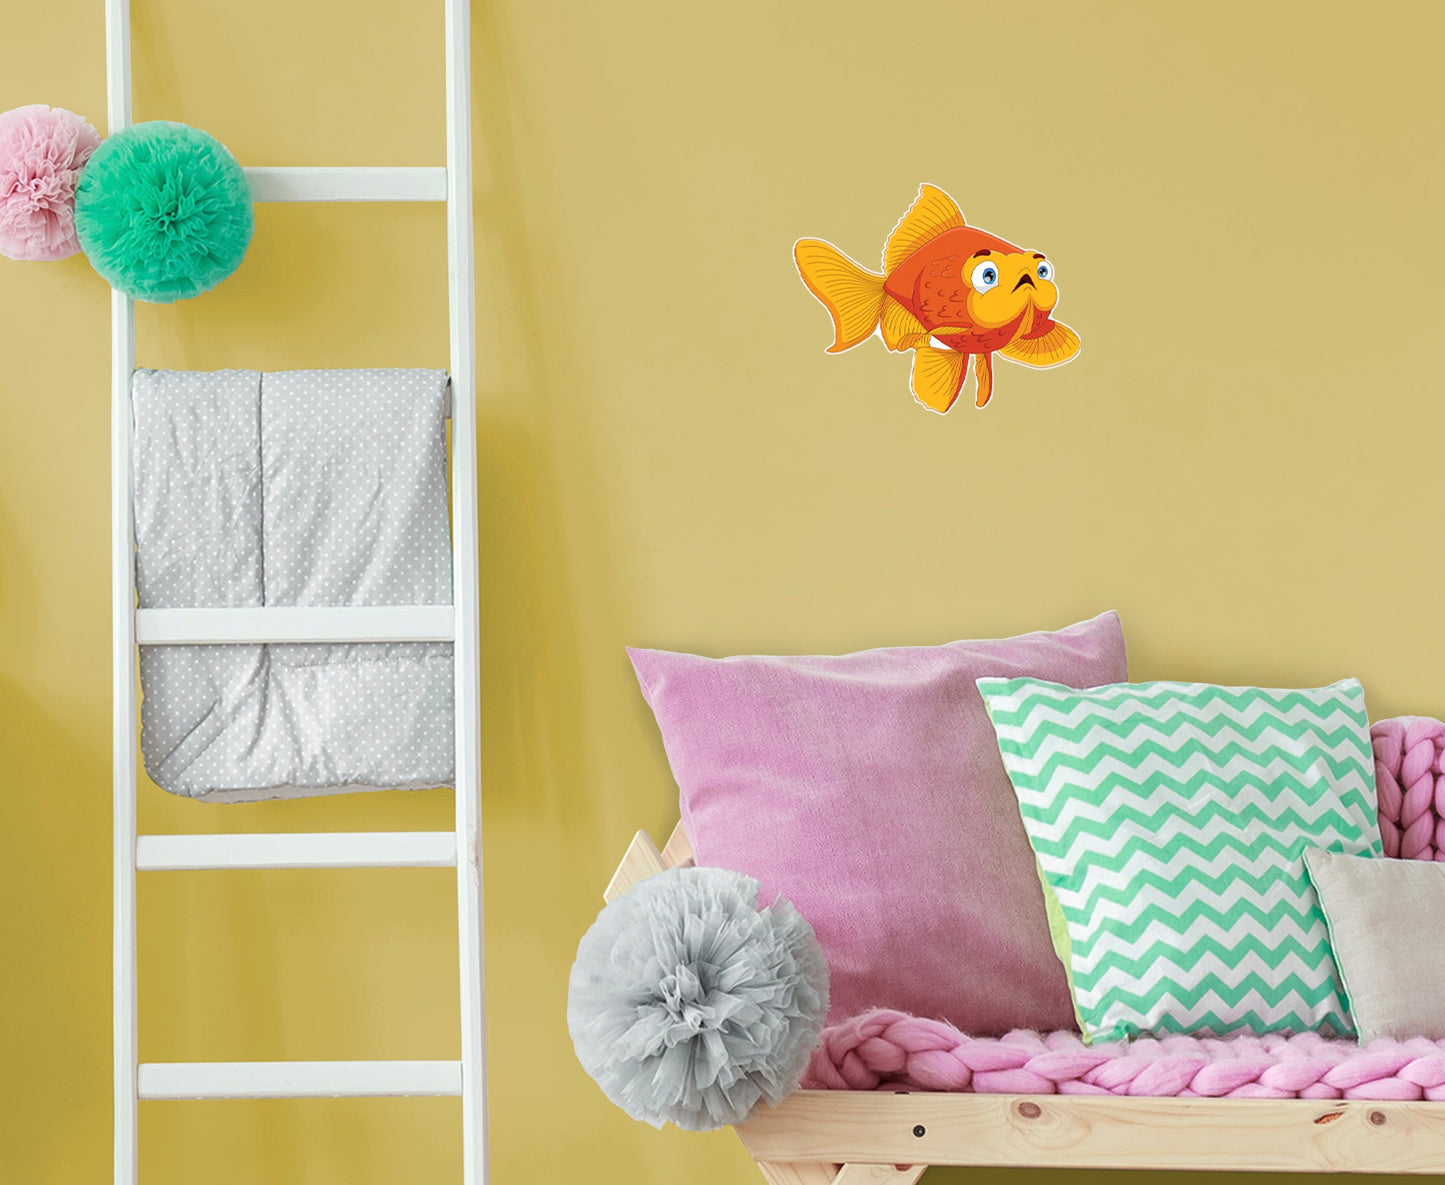 Nursery:  Orange Fish Icon        -   Removable Wall   Adhesive Decal